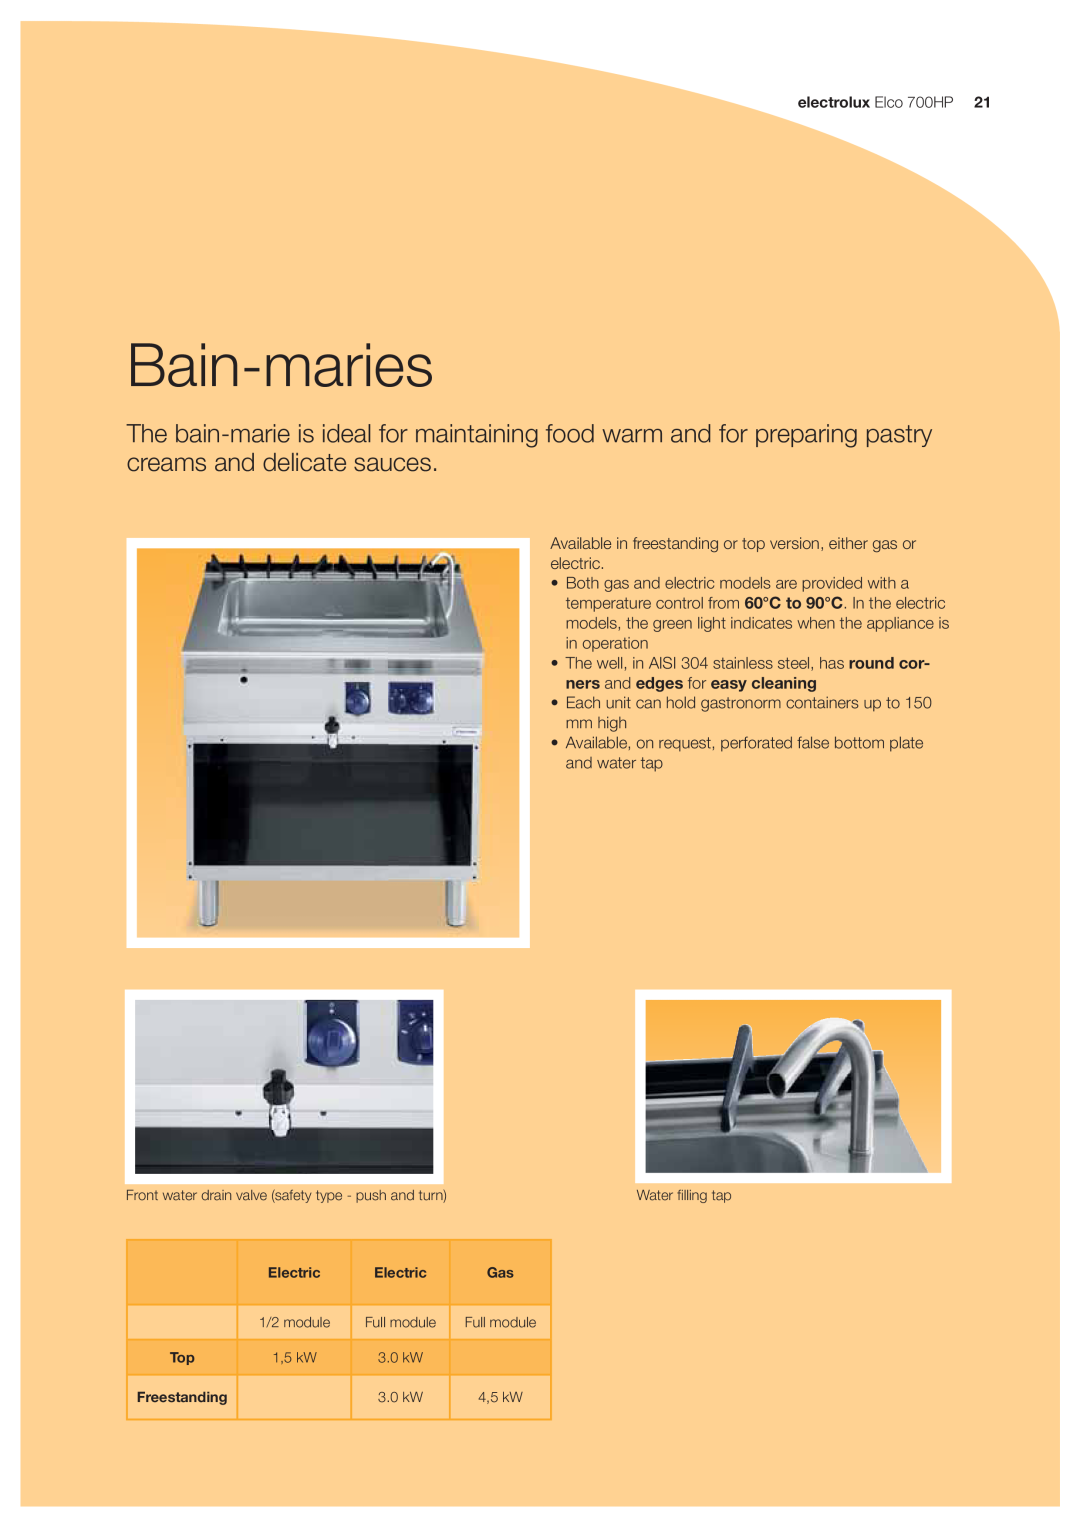 Electrolux manual Bain-maries, electrolux Elco 700HP, Electric, Freestanding 